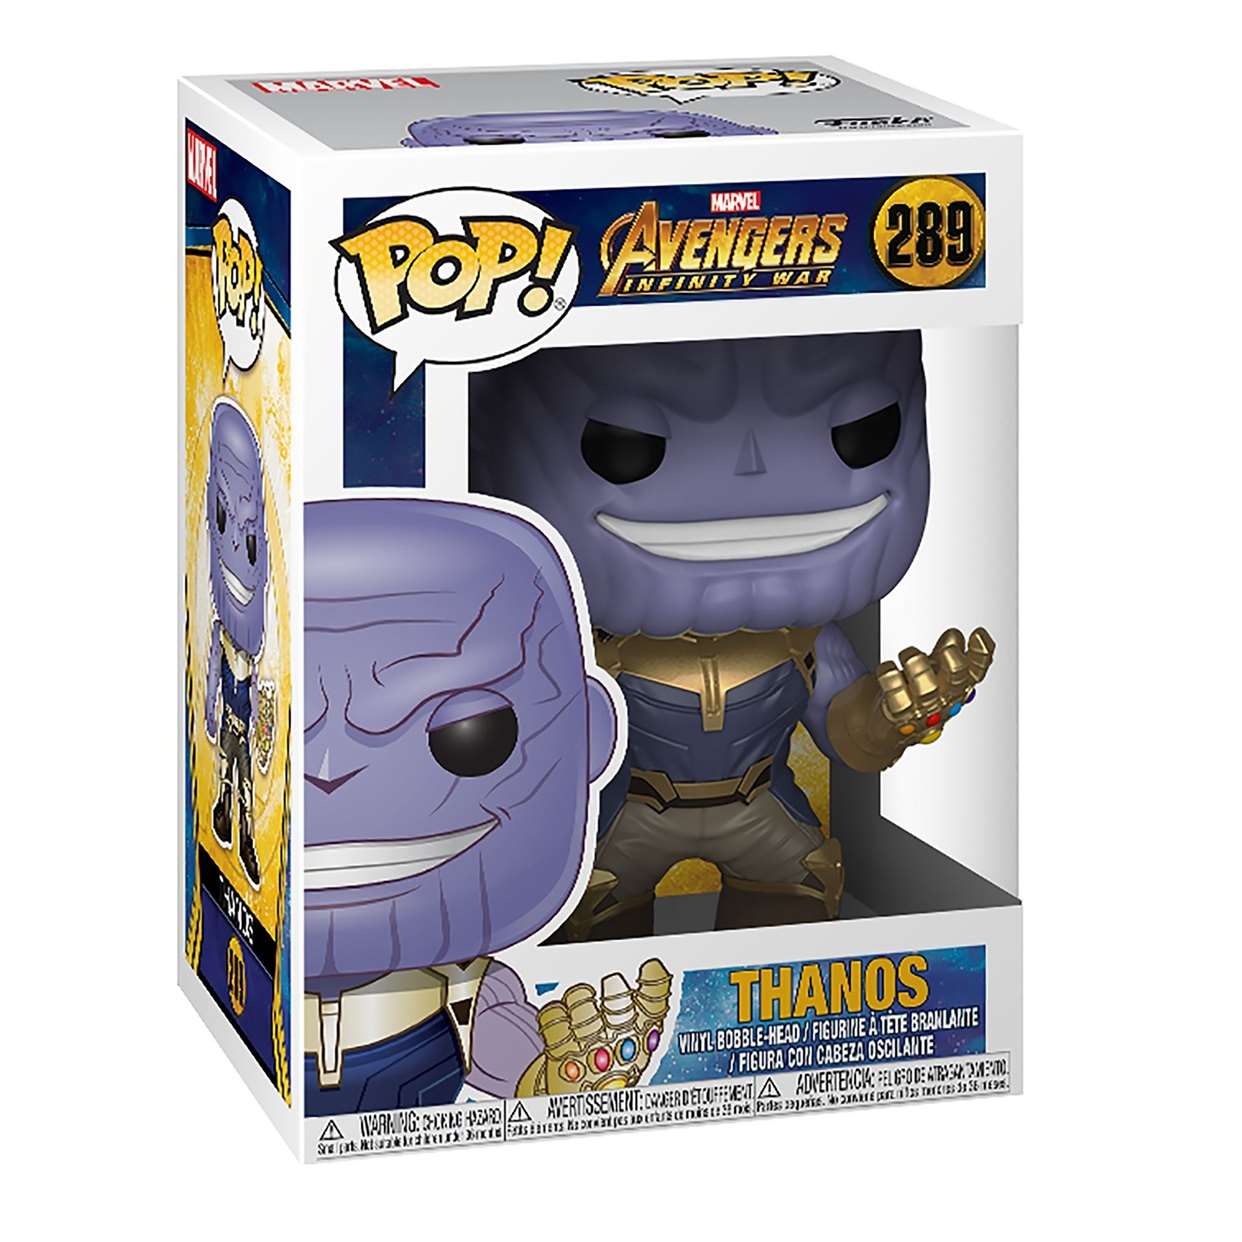 Thanos #289 Figura Avengers Infinity War Funko Pop!